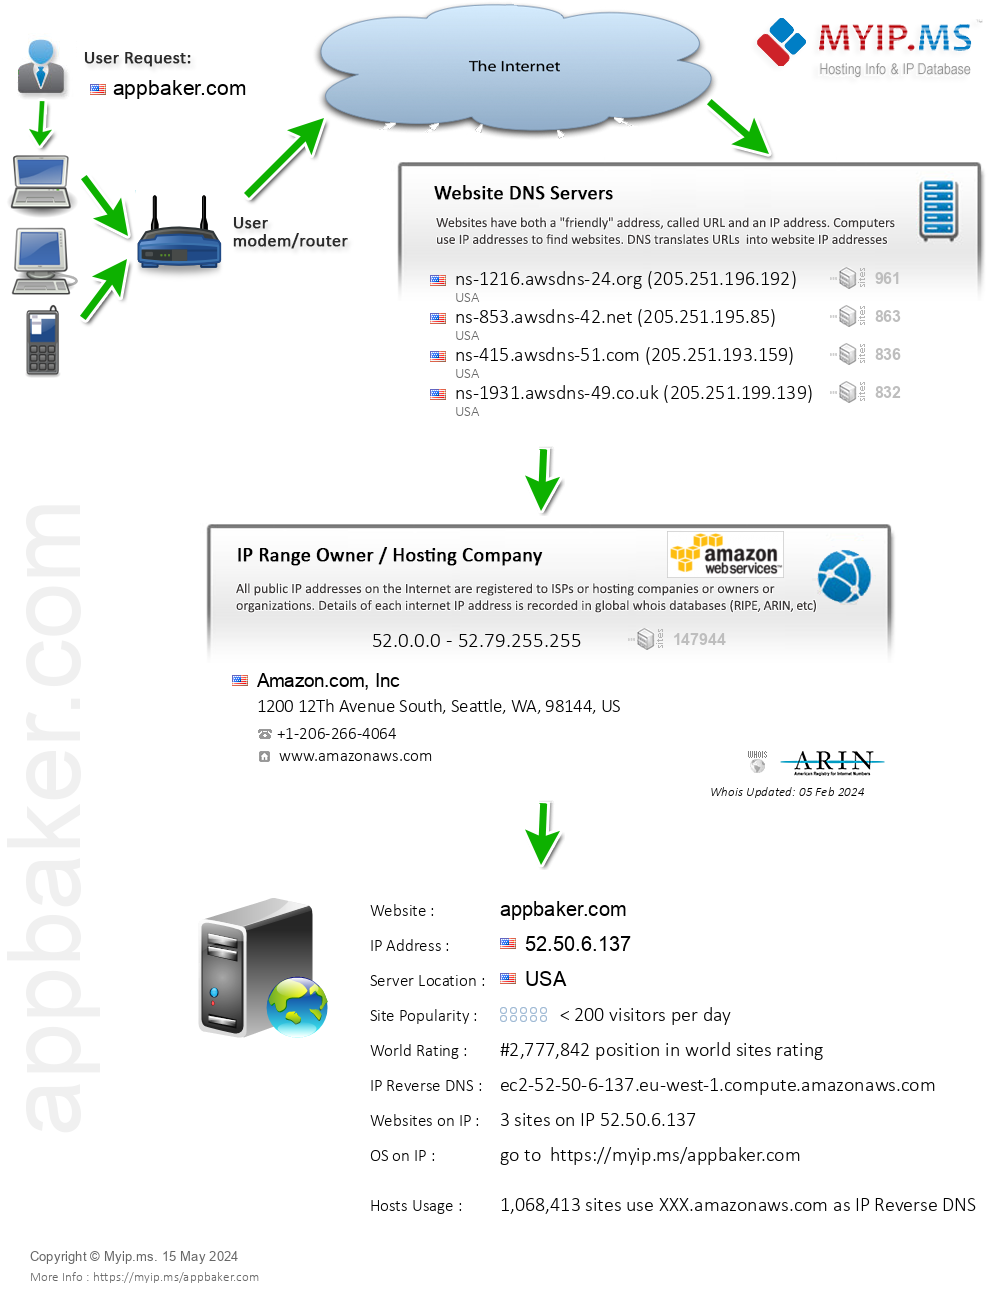 Appbaker.com - Website Hosting Visual IP Diagram